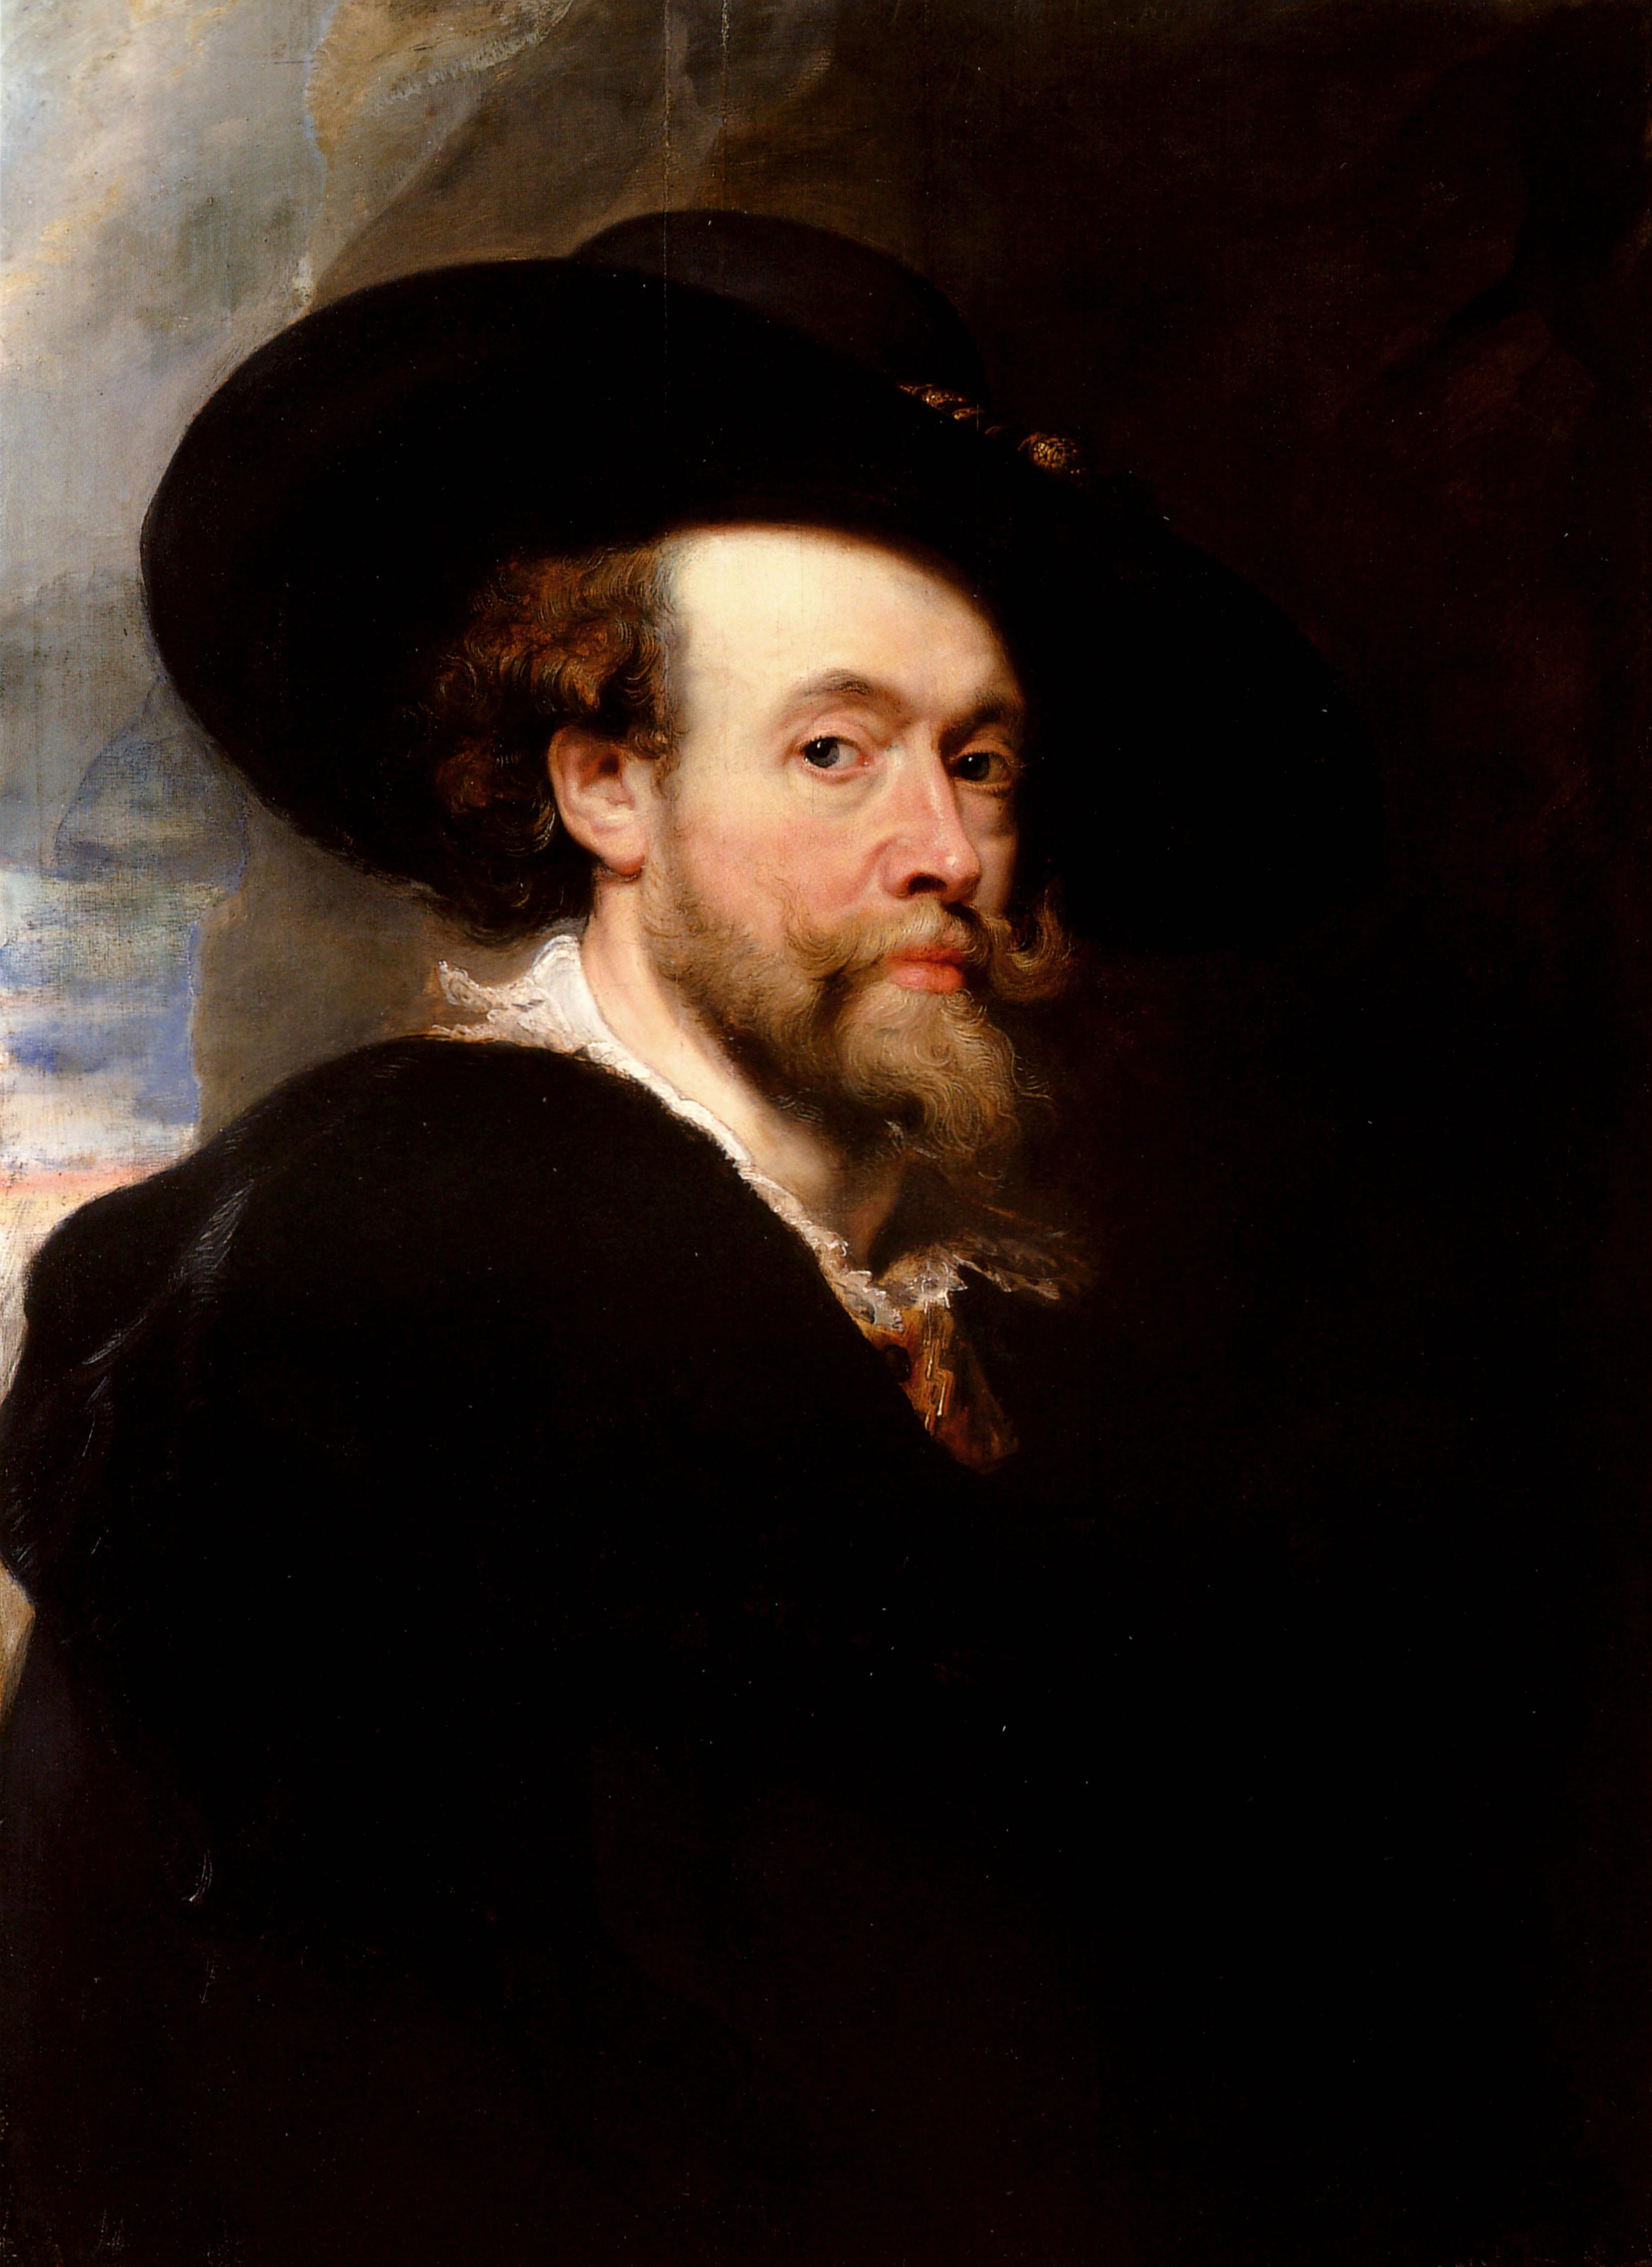 /800/600/https/upload.wikimedia.org/wikipedia/commons/d/db/Rubens_Self-portrait_1623.jpg